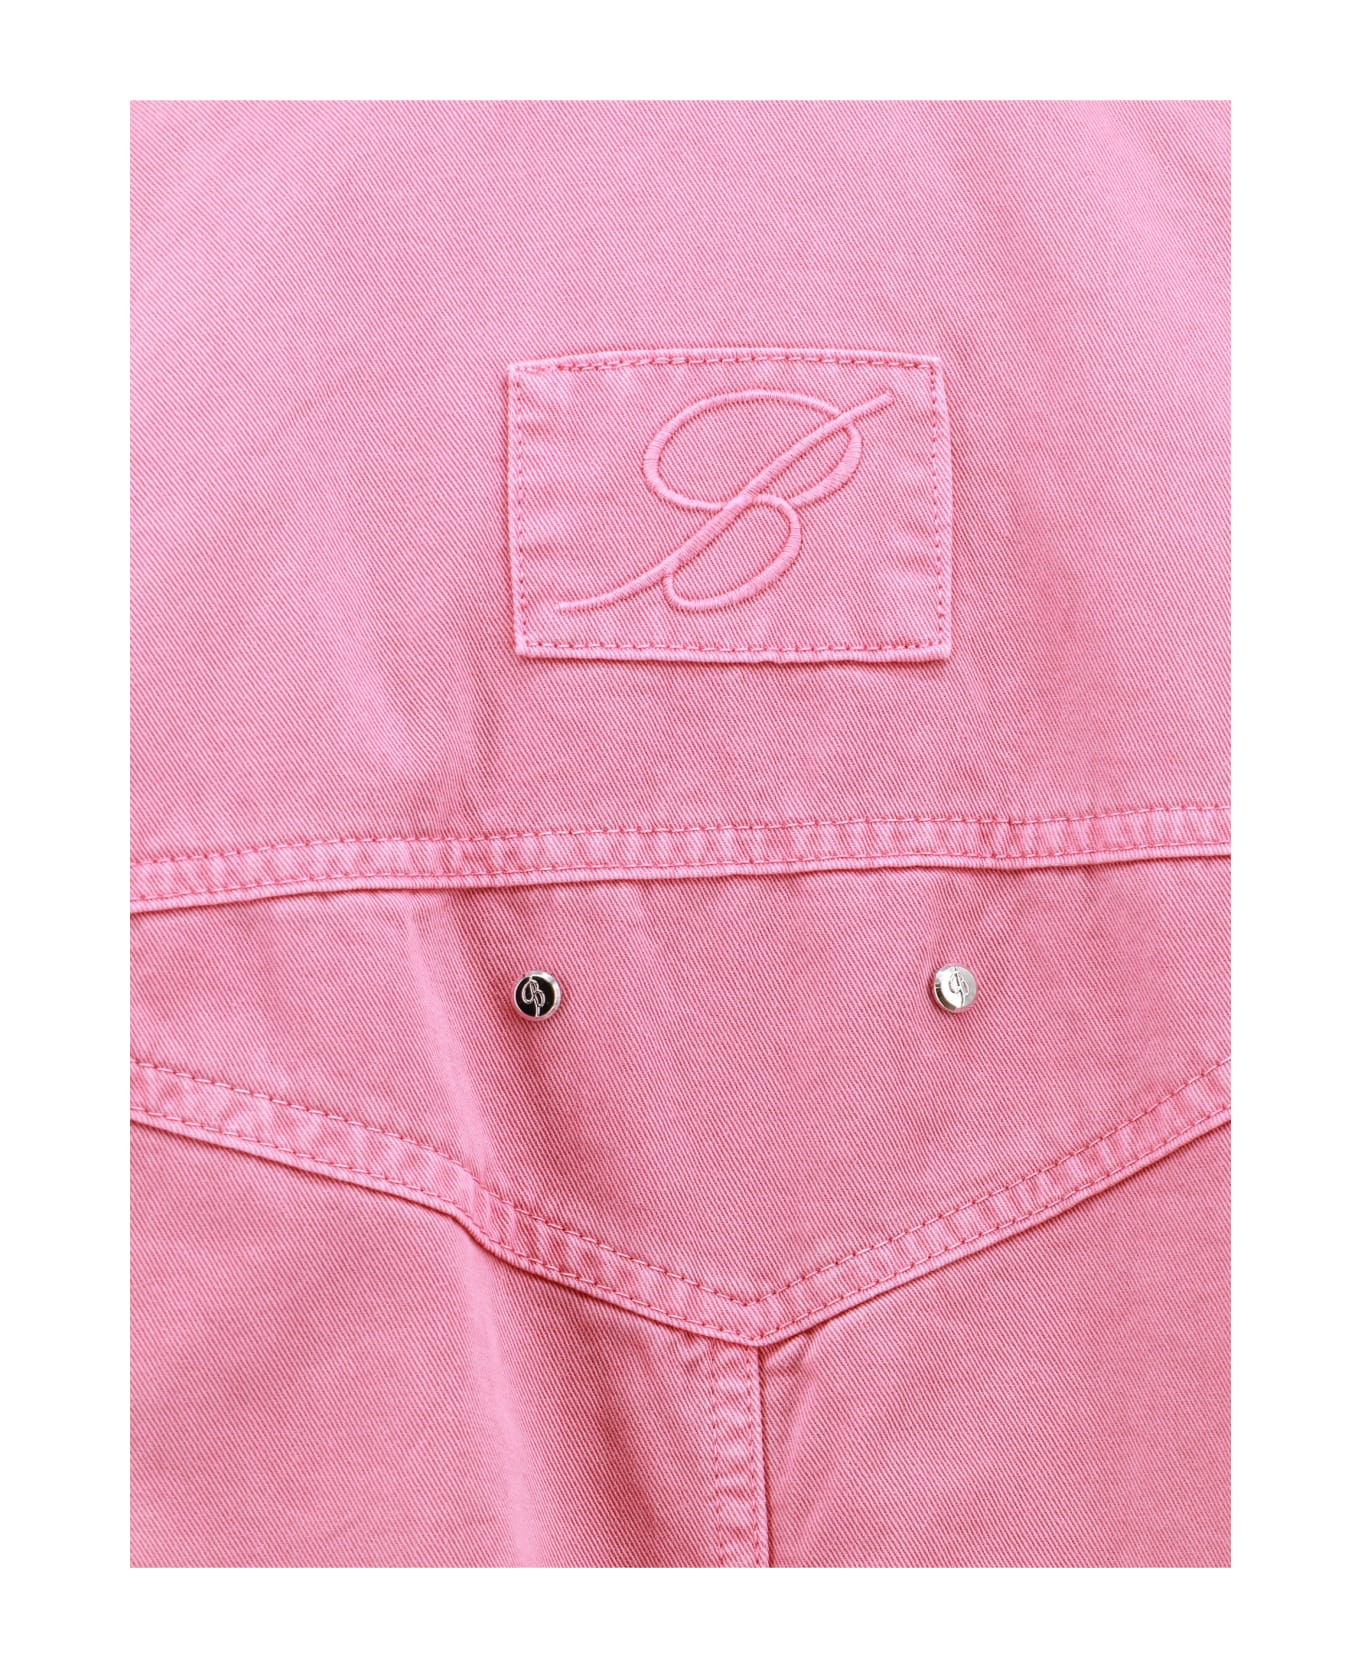 Blumarine Jacket - Pink